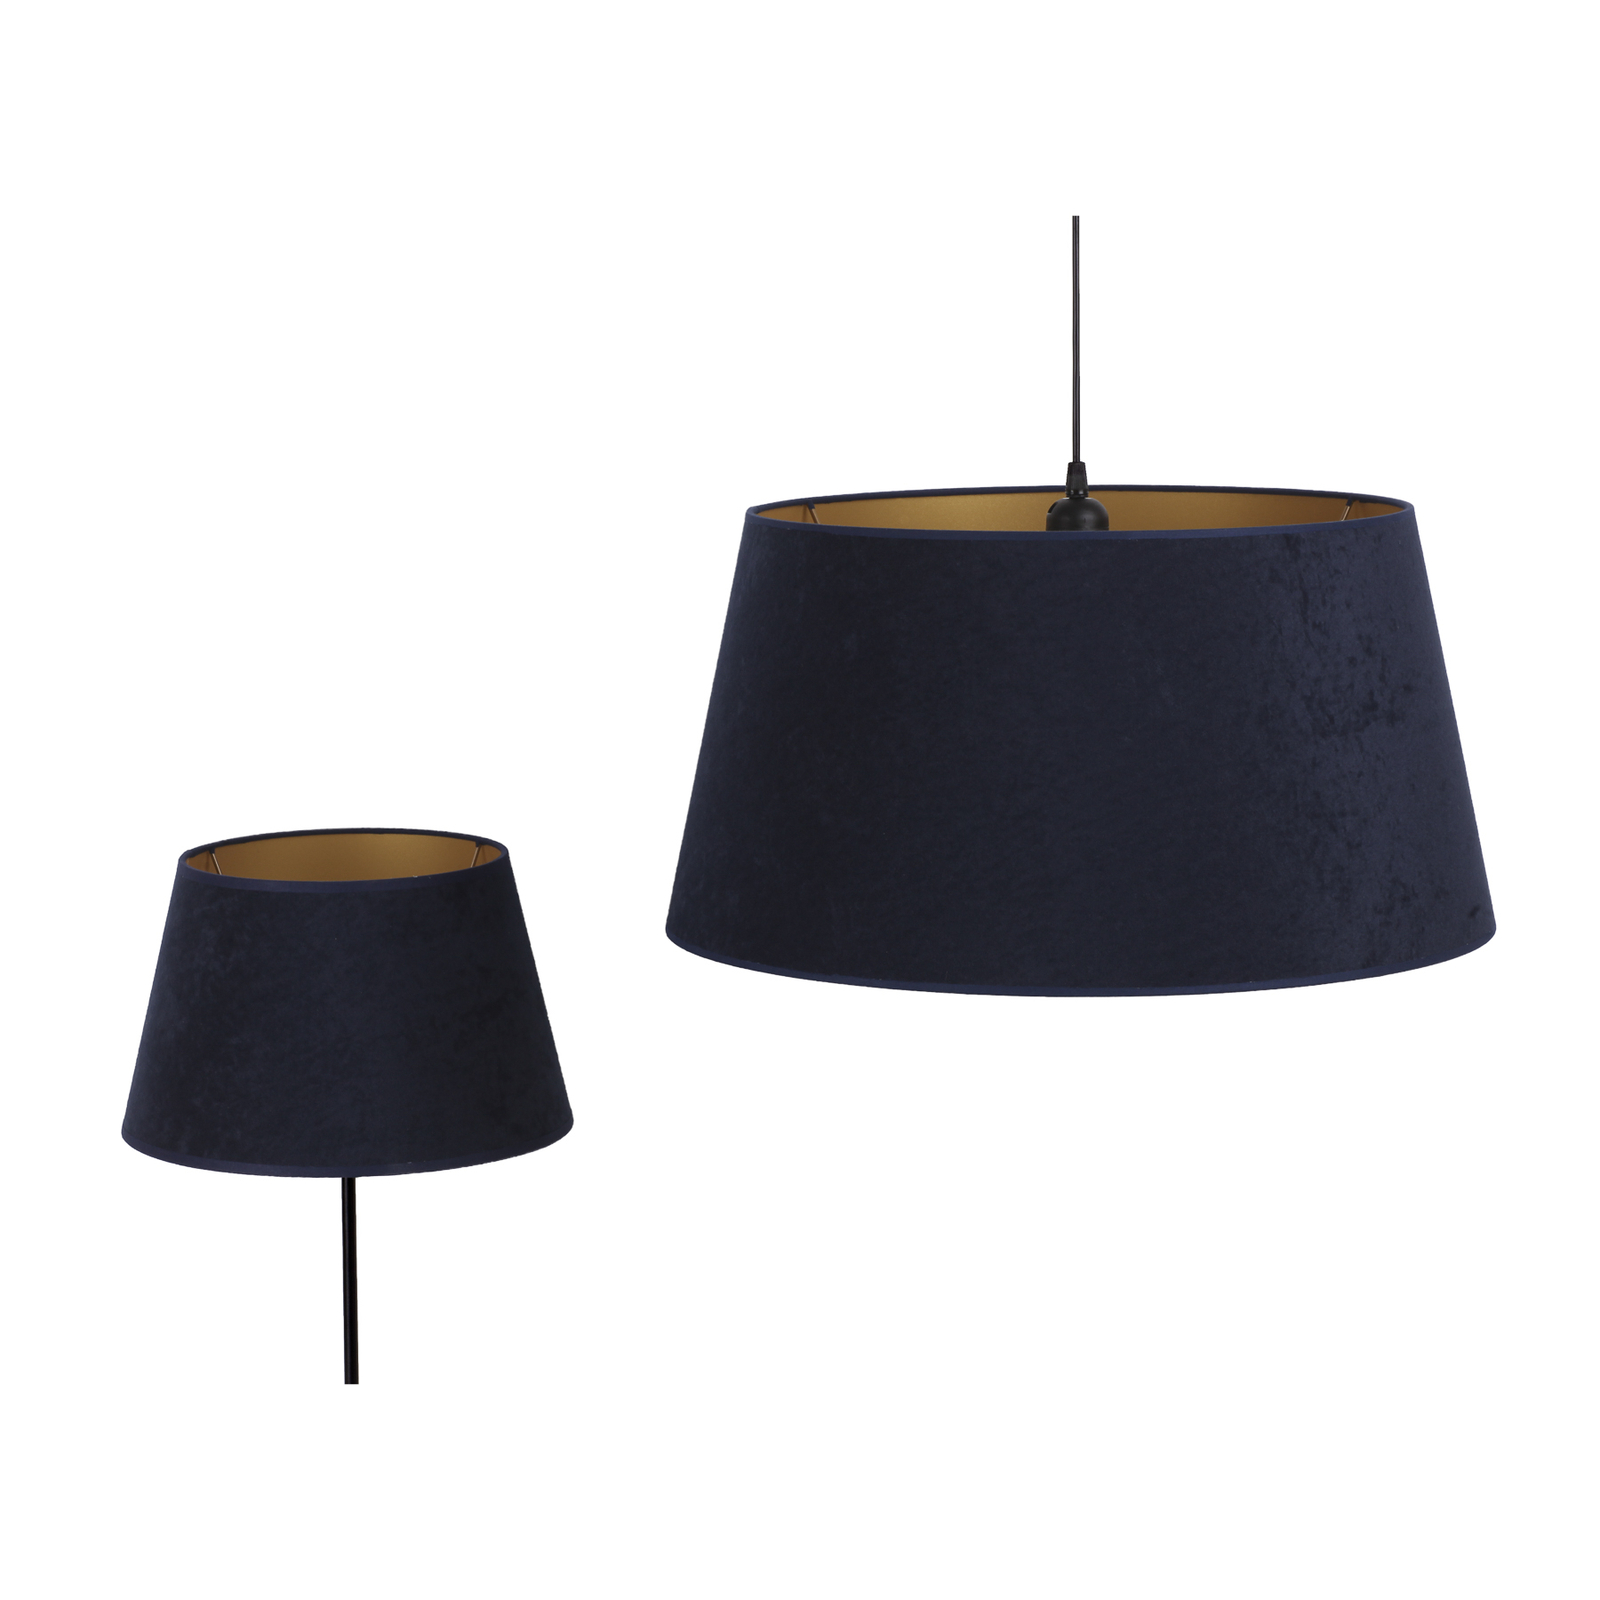 Cone lampshade height 18 cm, dark blue/gold